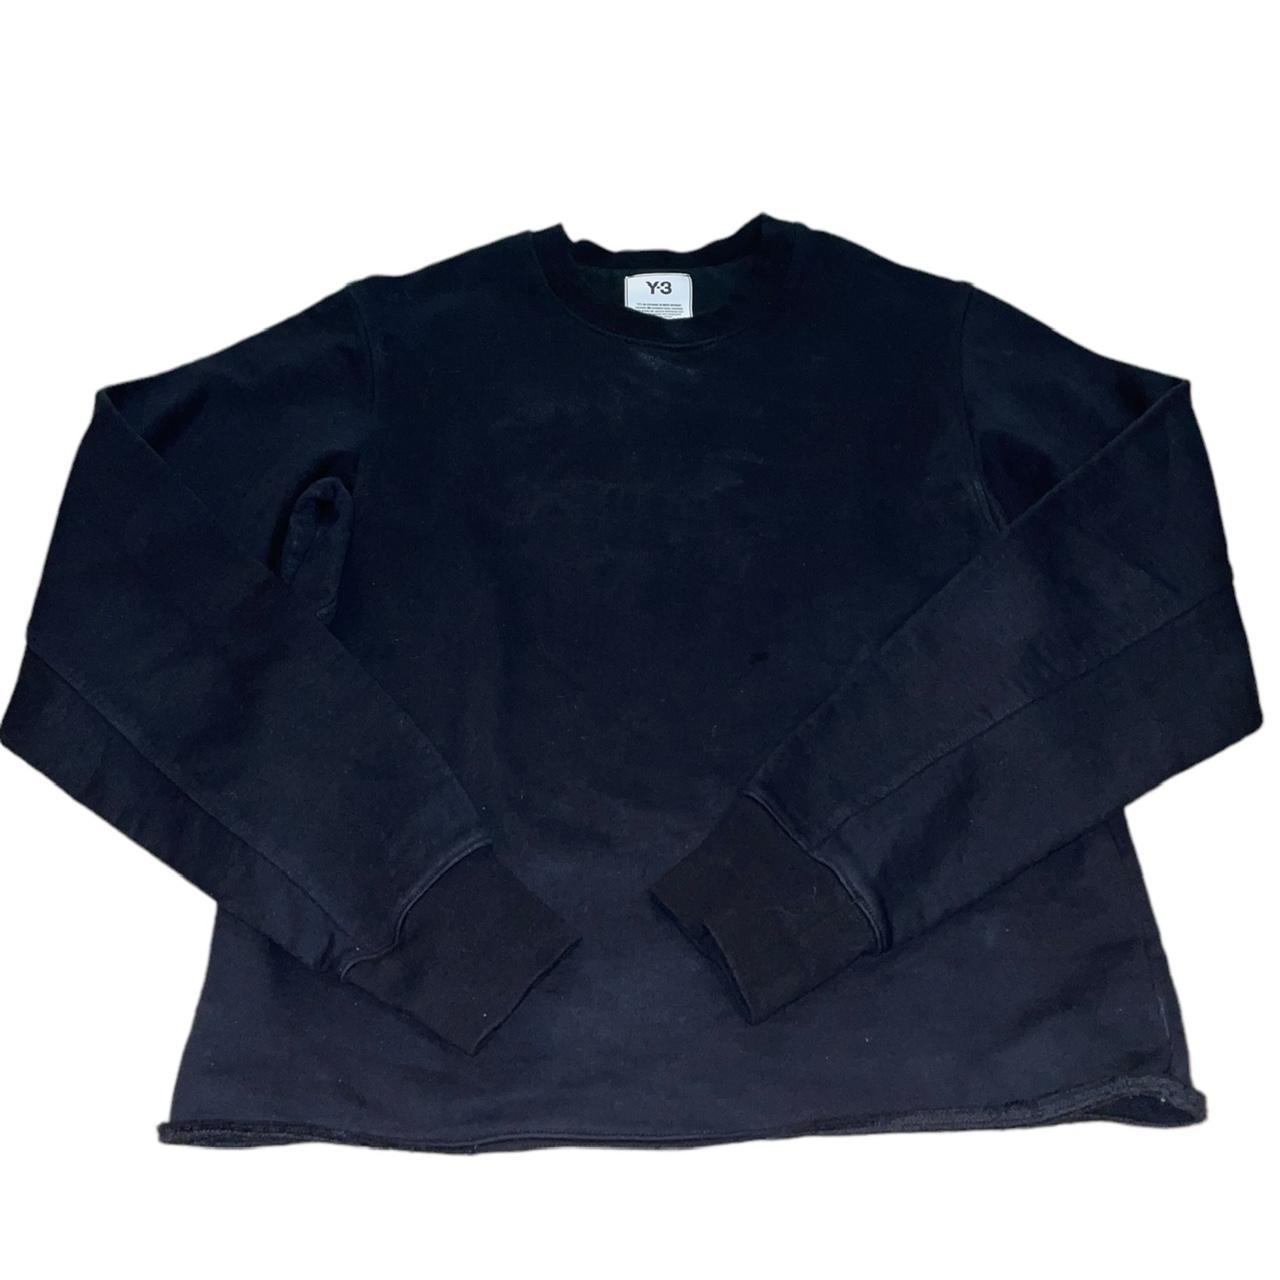 Product Image 3 - Y-3 mens M black sweatshirt